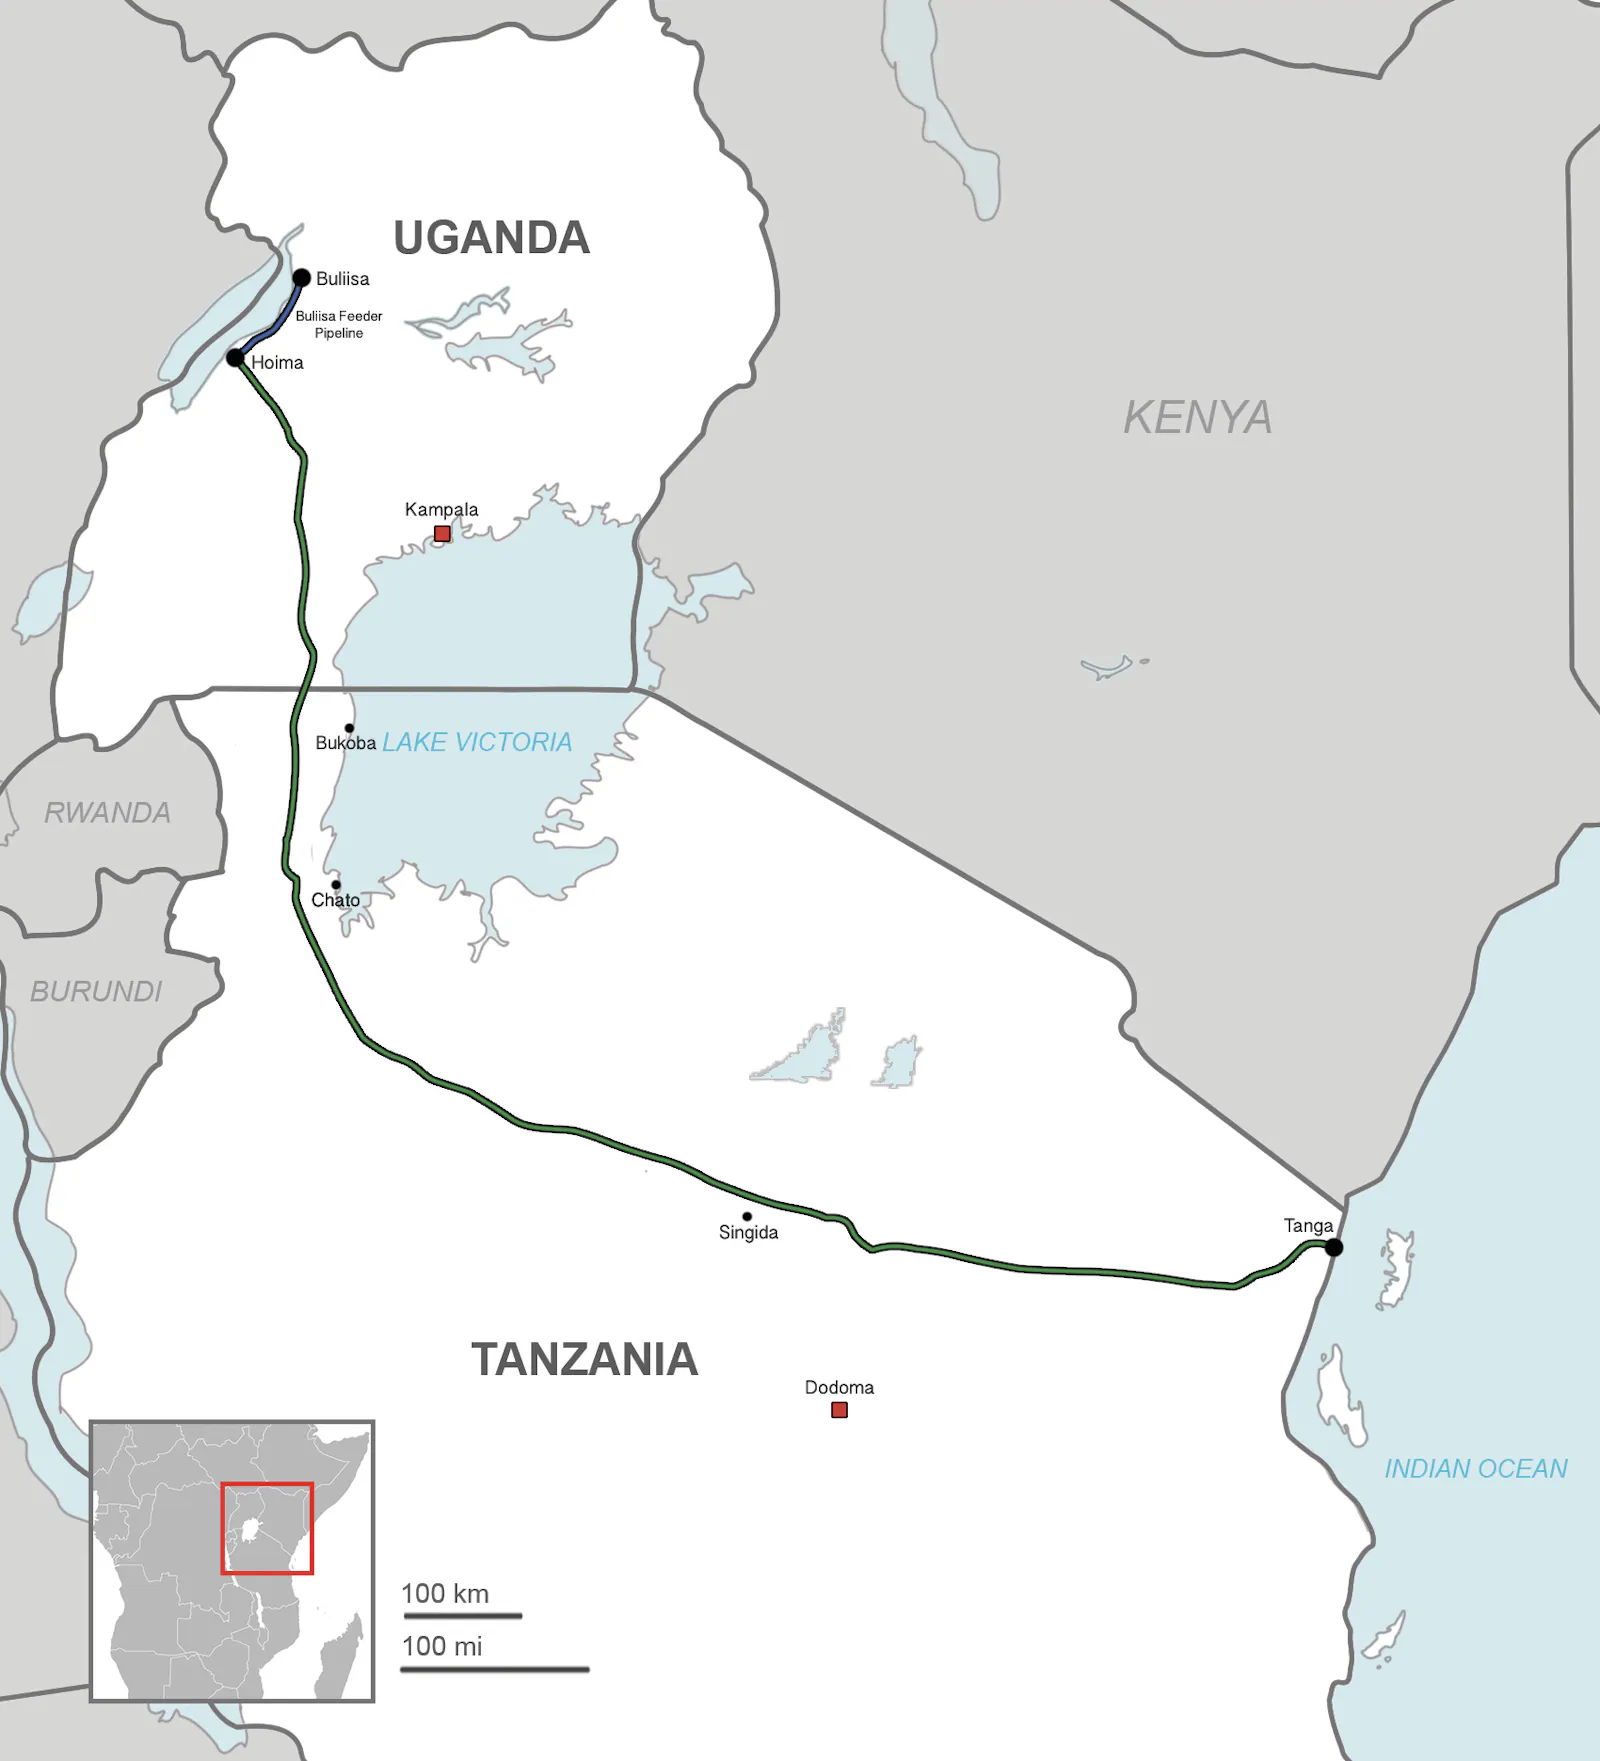 https://upload.wikimedia.org/wikipedia/commons/a/a8/Uganda-Tanzania_Proposed_Pipeline.jpg